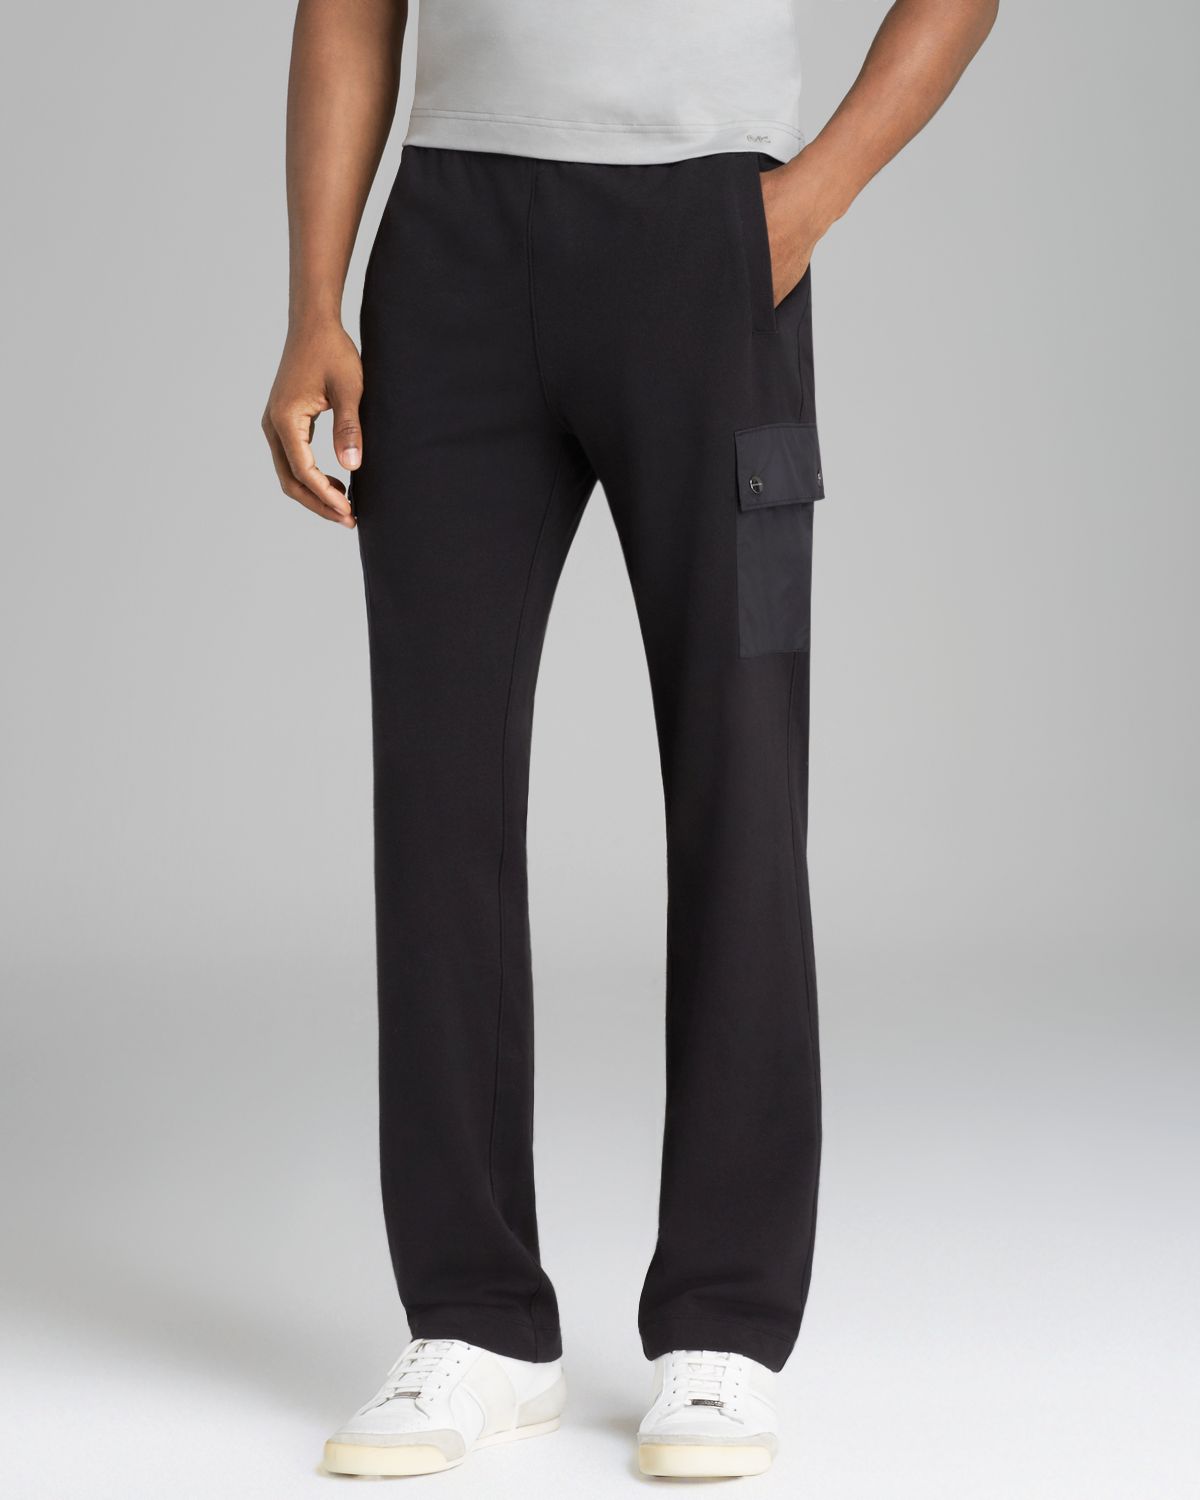 Michael Kors Cargo Pocket Knit Sweatpants in Black for Men - Lyst